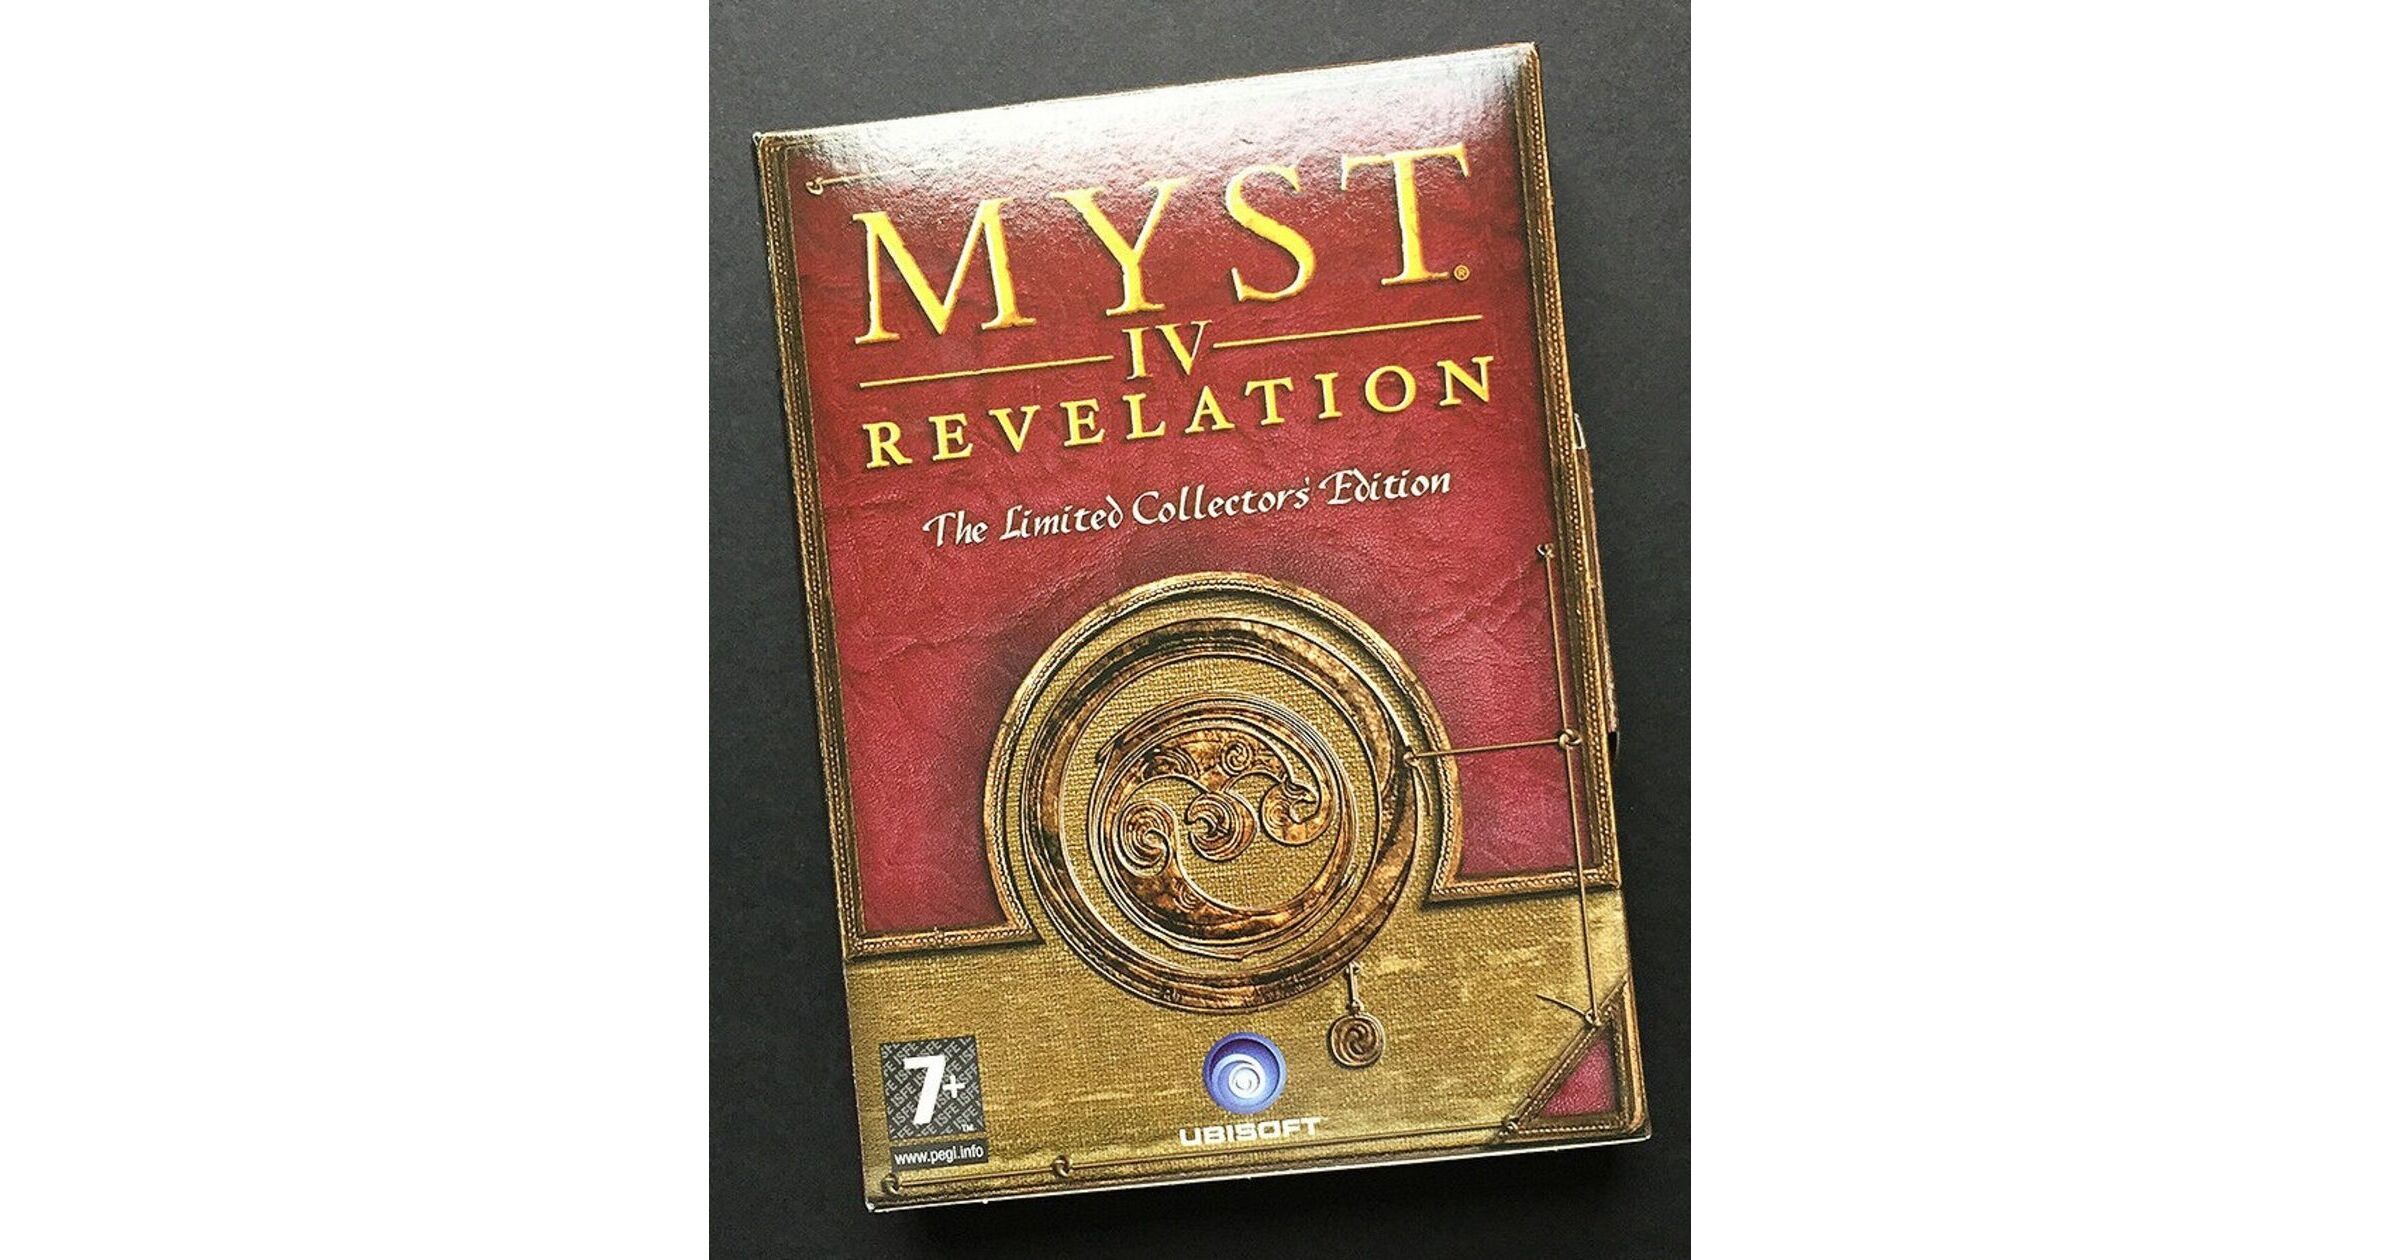 how to install myst iv revelations